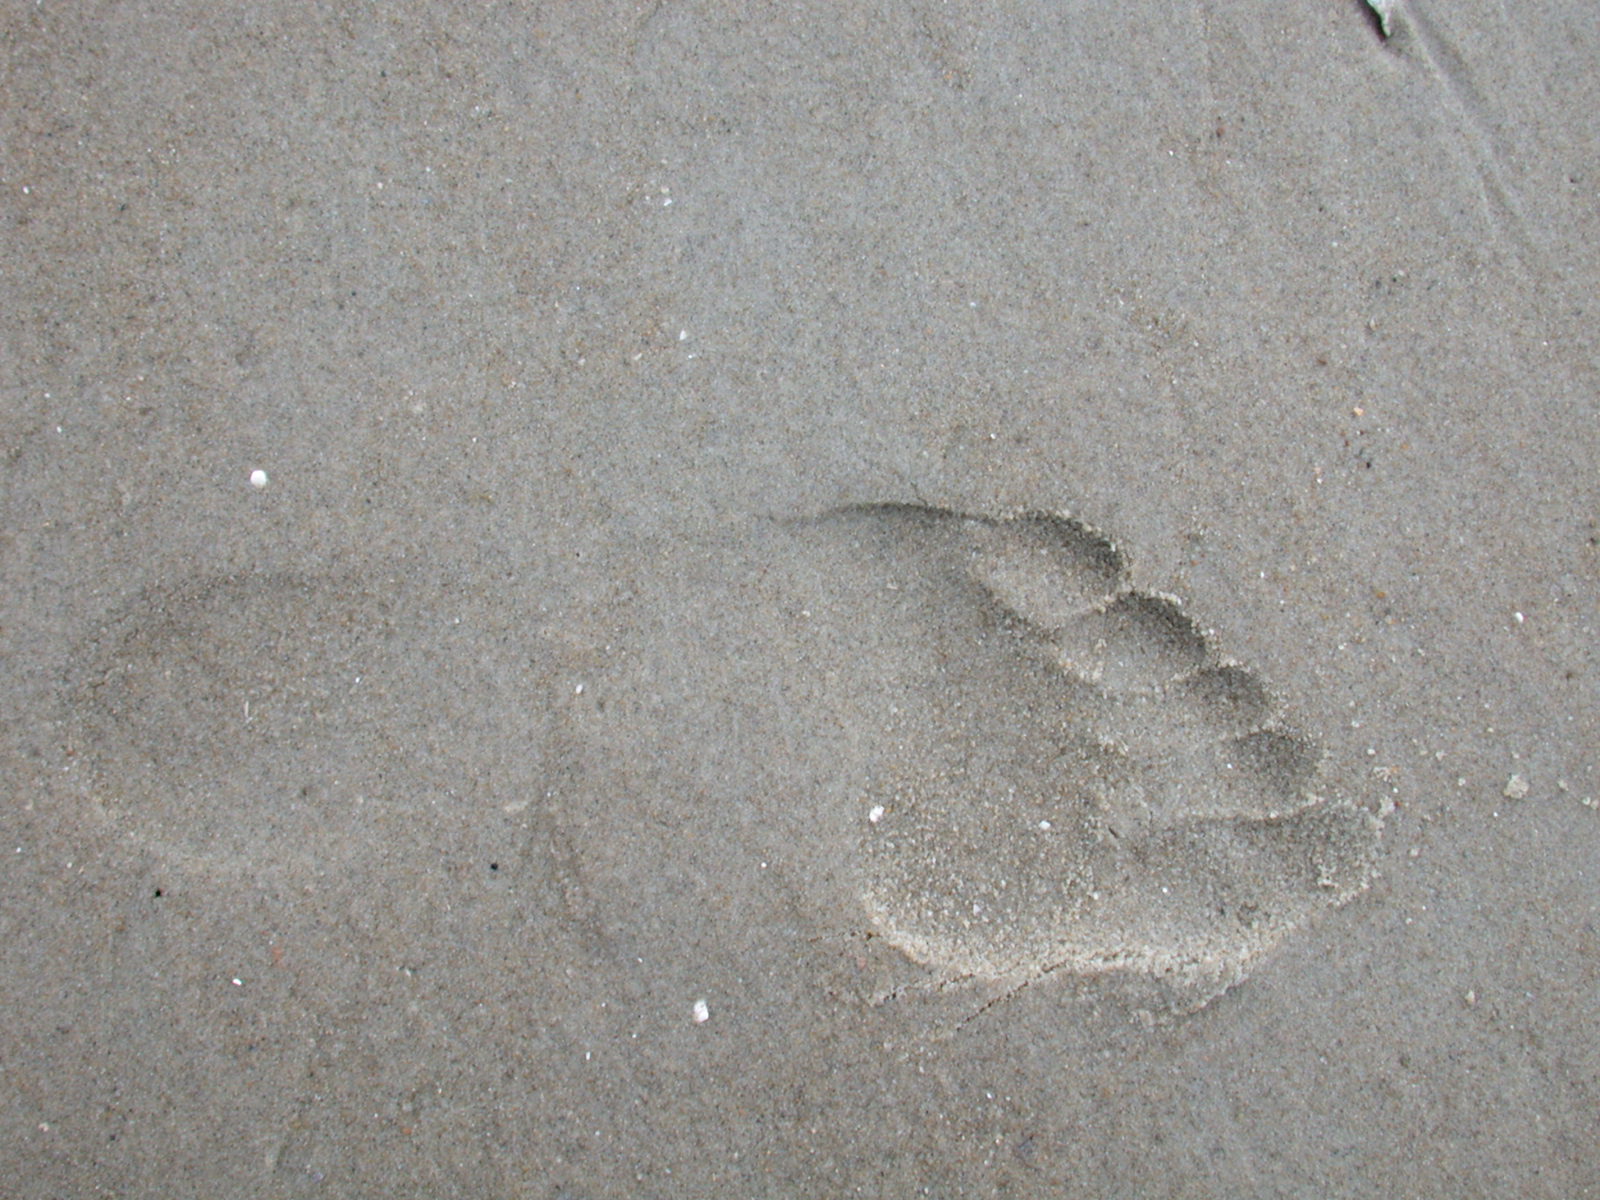 sand foot print footprint foot-print after step footstep imprint imprinted left behind